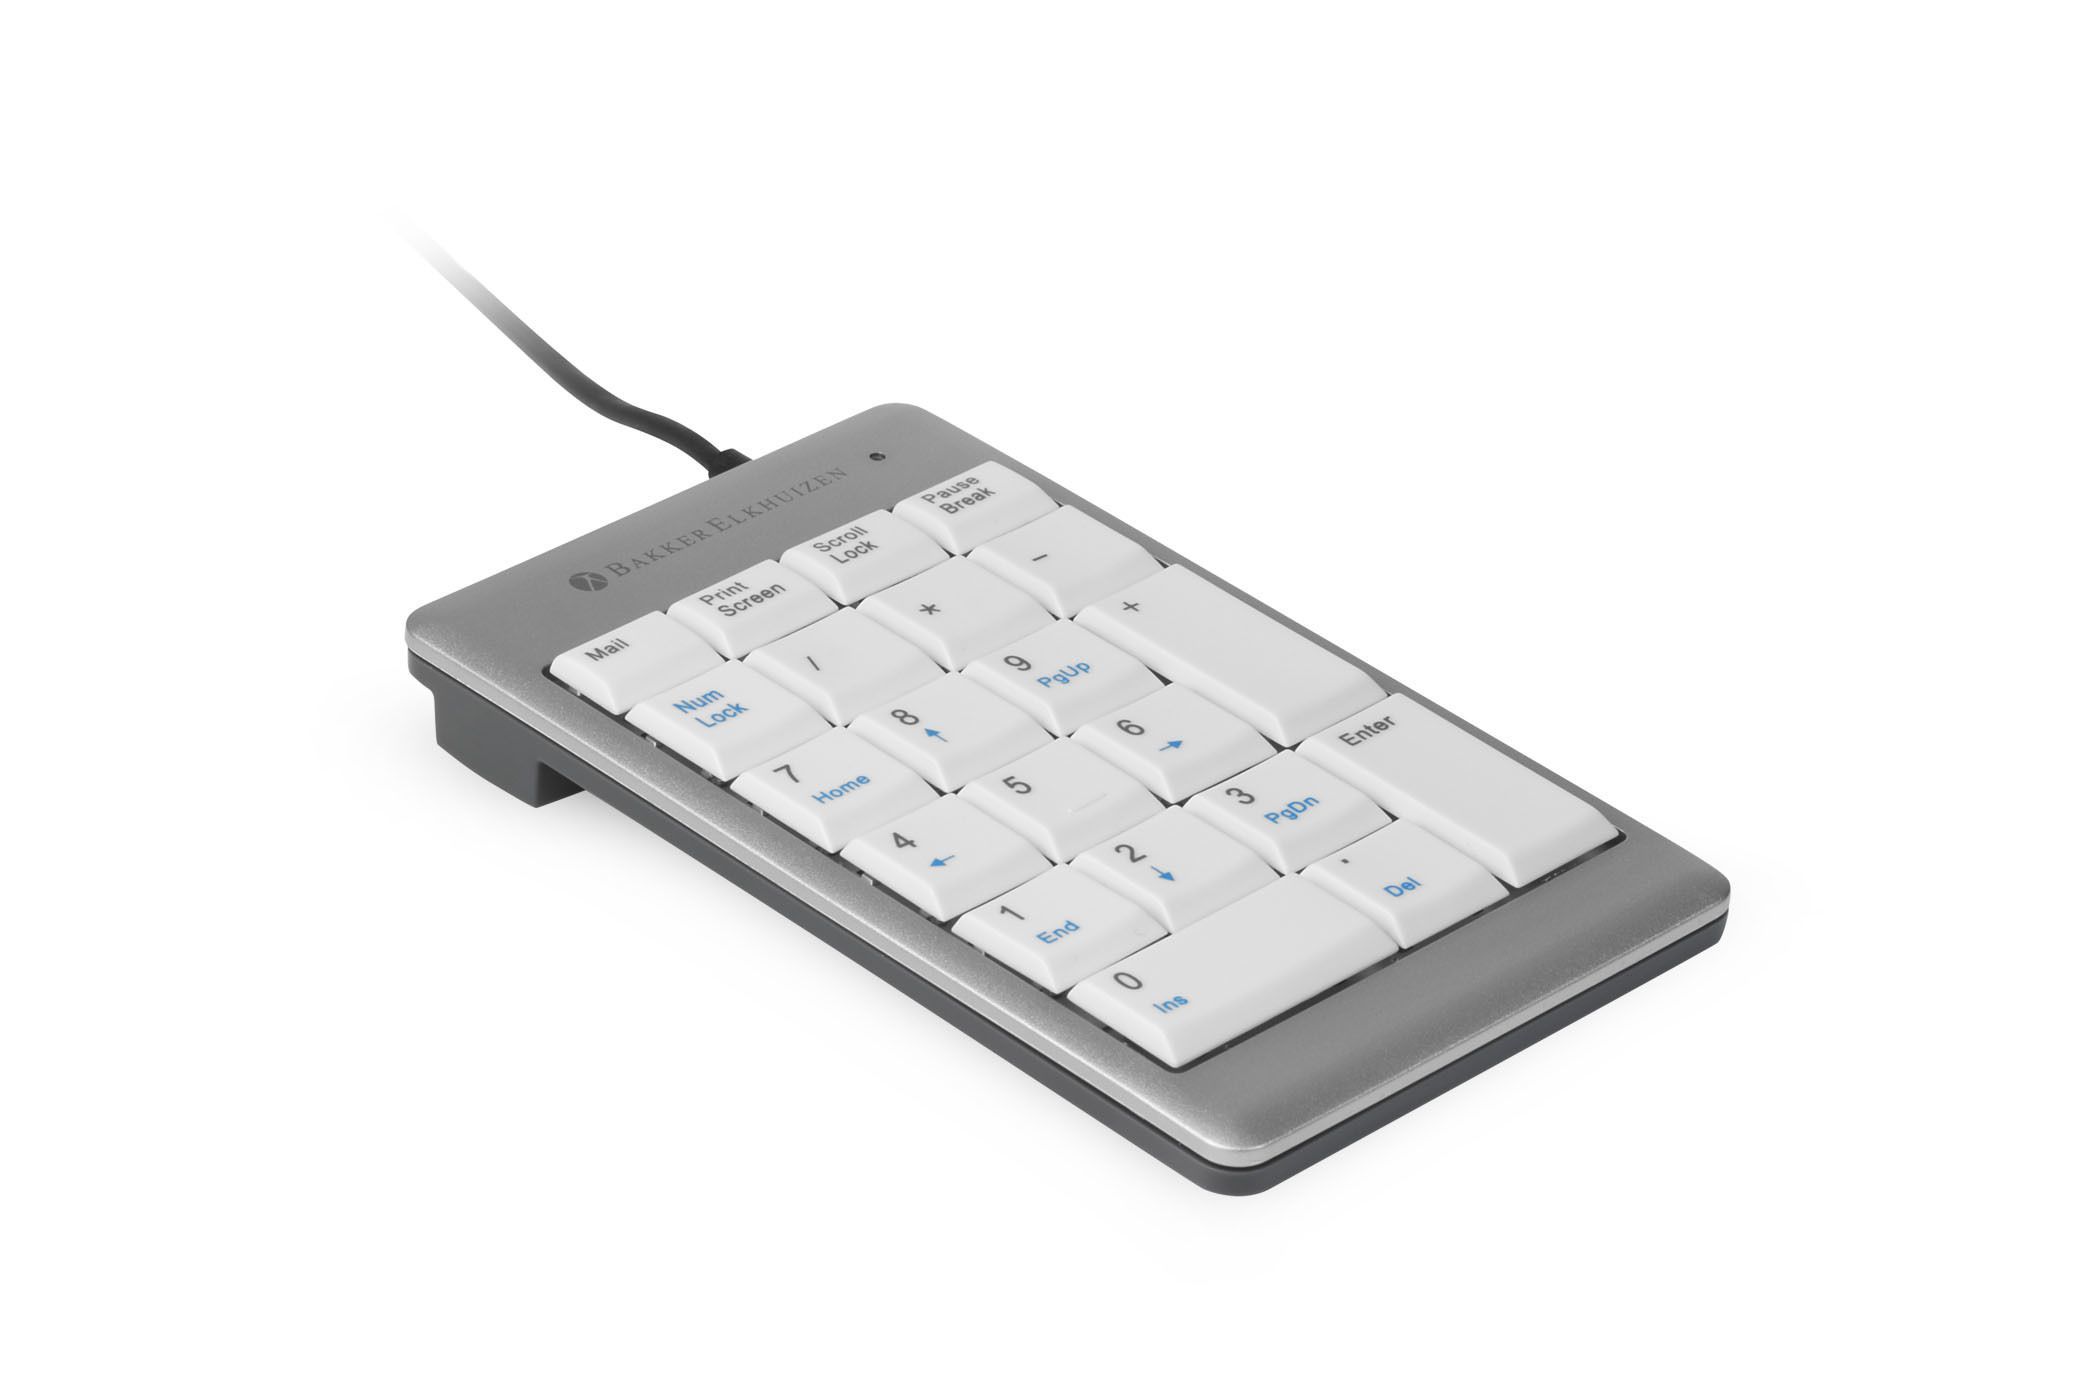 Stationair Sandalen opvolger Ultraboard 955 numeriek toetsenbord: eenvoudige data-invoer - Health2Work